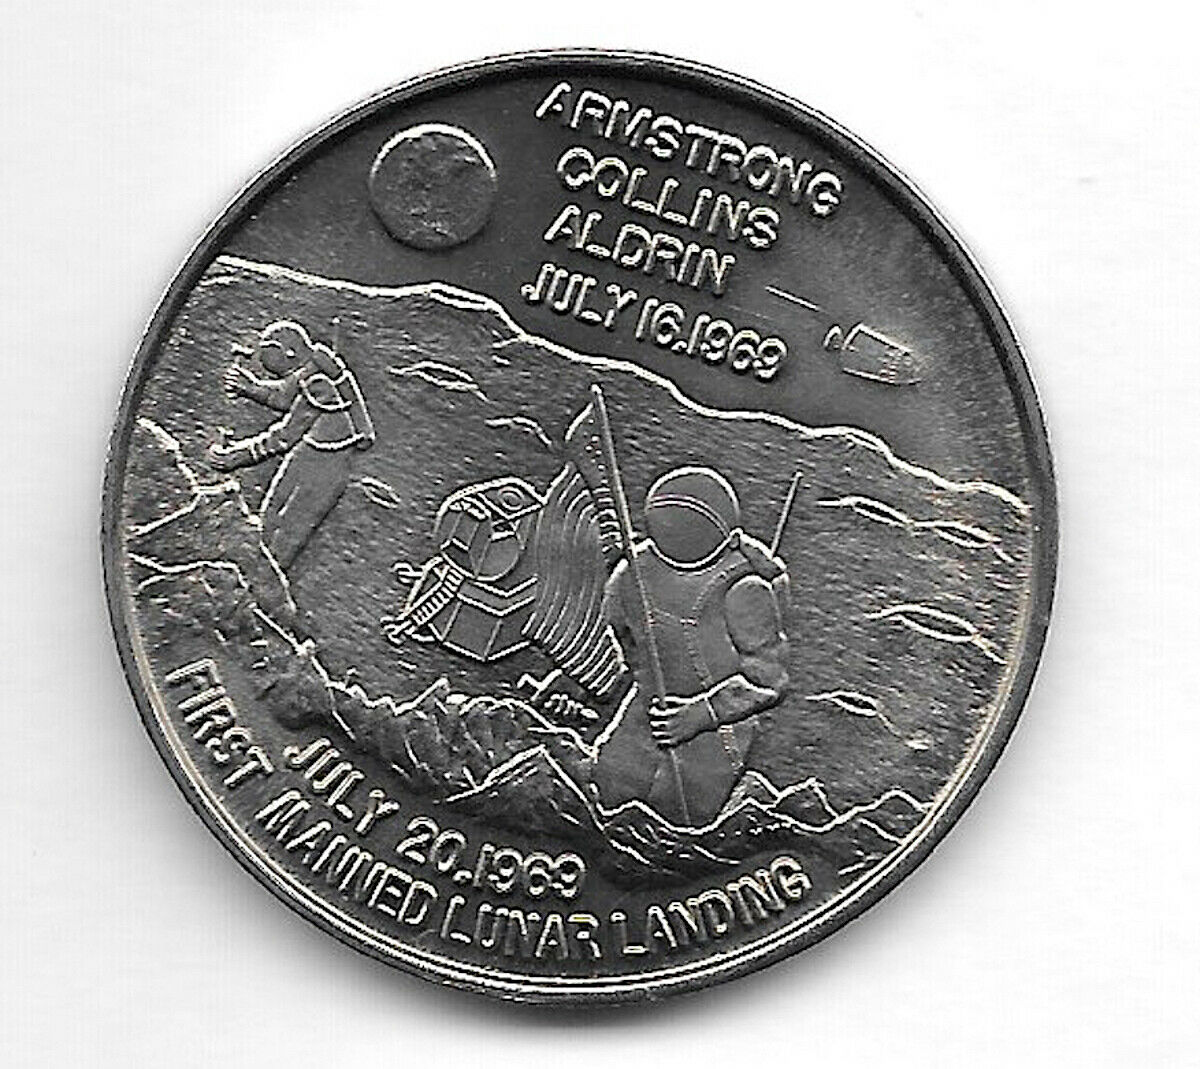 Nasa Apollo 11 "1st Manned Lunar Landing" 7-16-20,1969 Cupronickel Commemorative